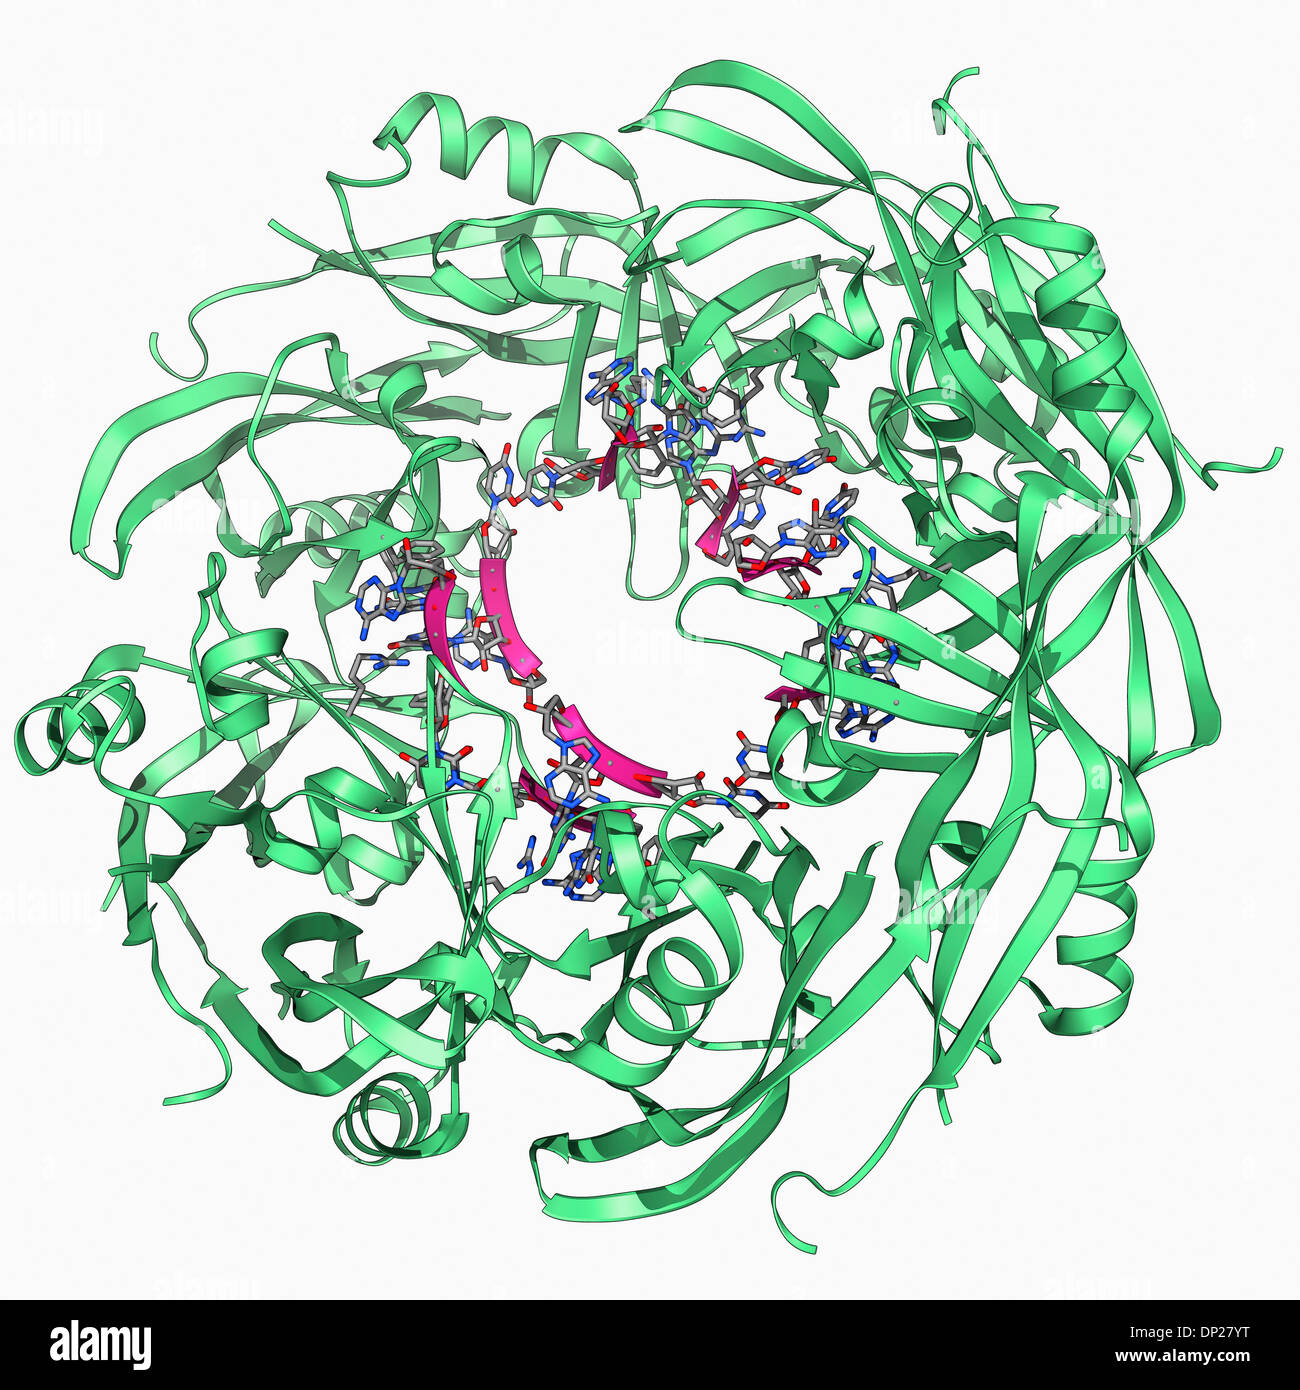 Ebola matrix protein molecule Stock Photo